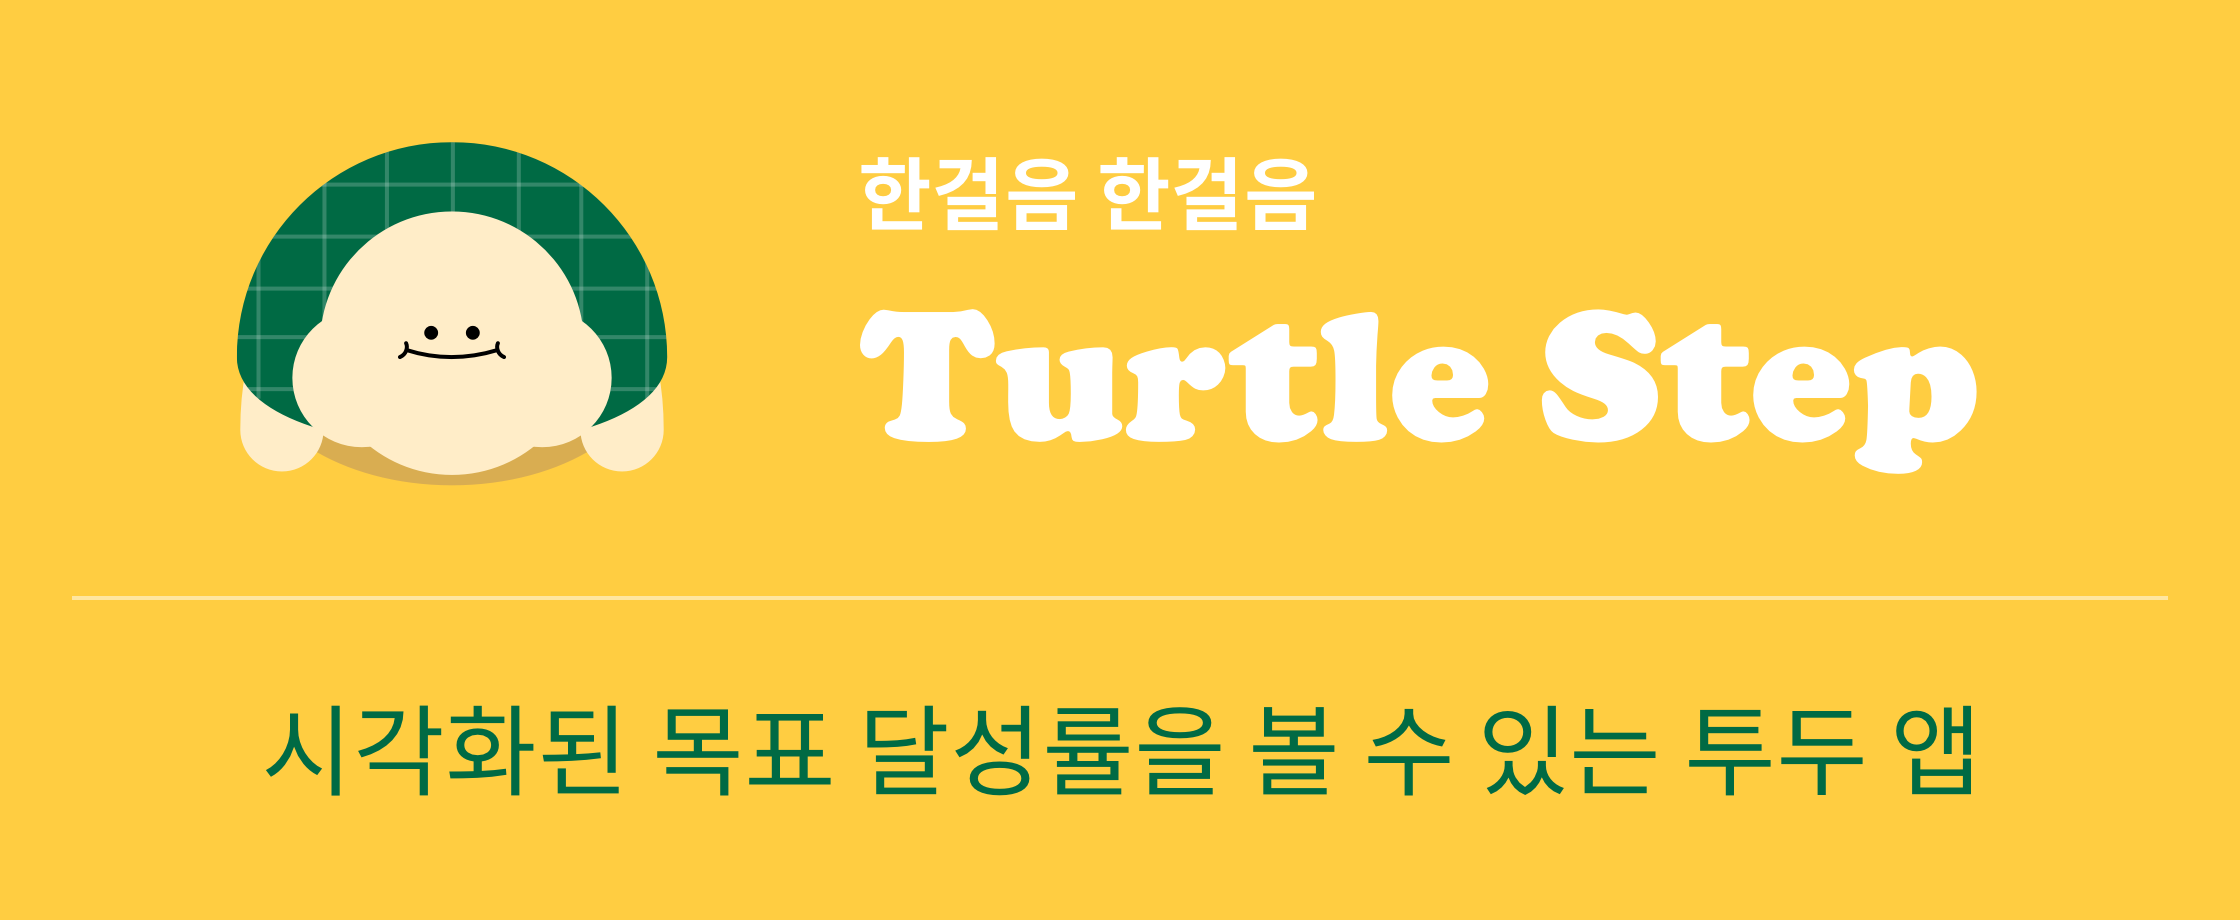 Turtle Step Title